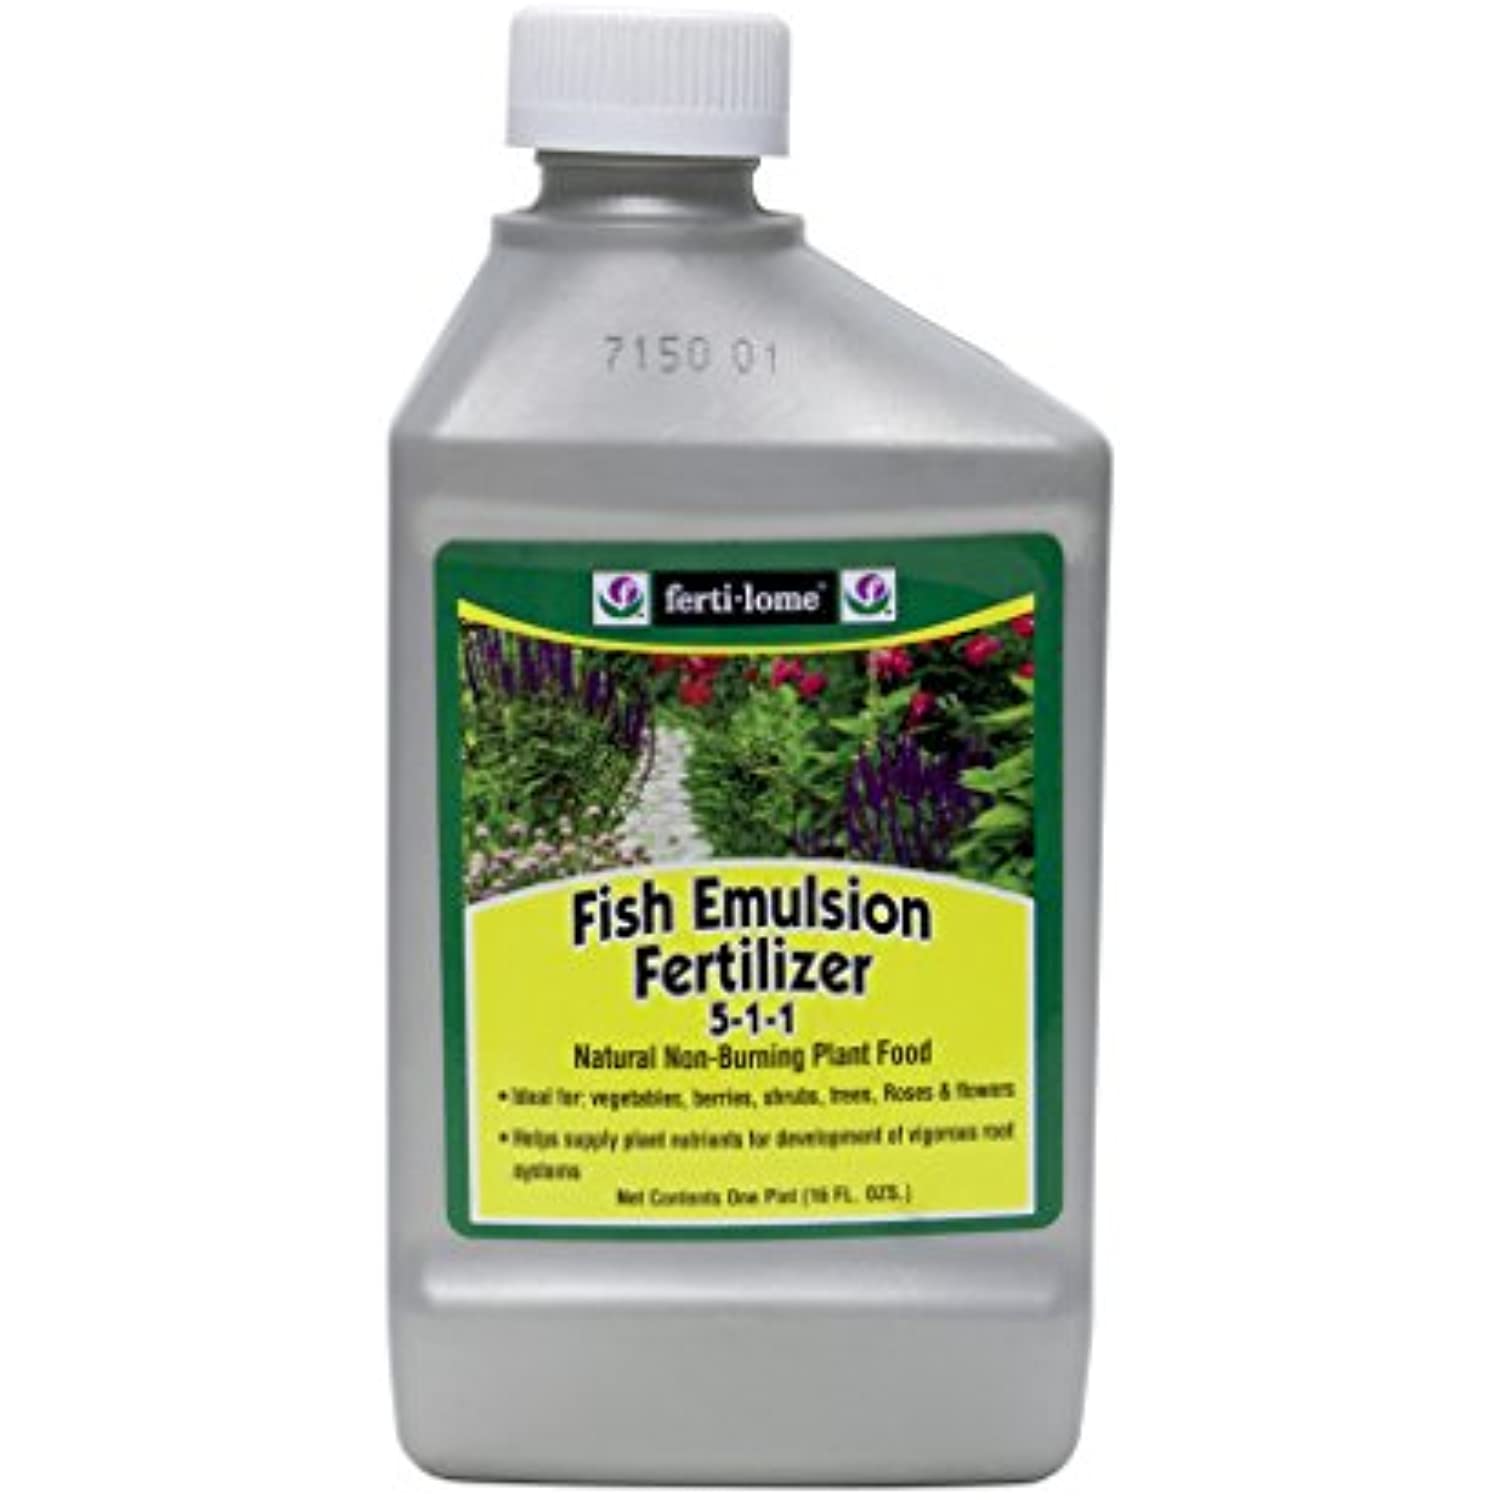 fertilome Fish Emulsion Fertilizer Liquid Plant Food